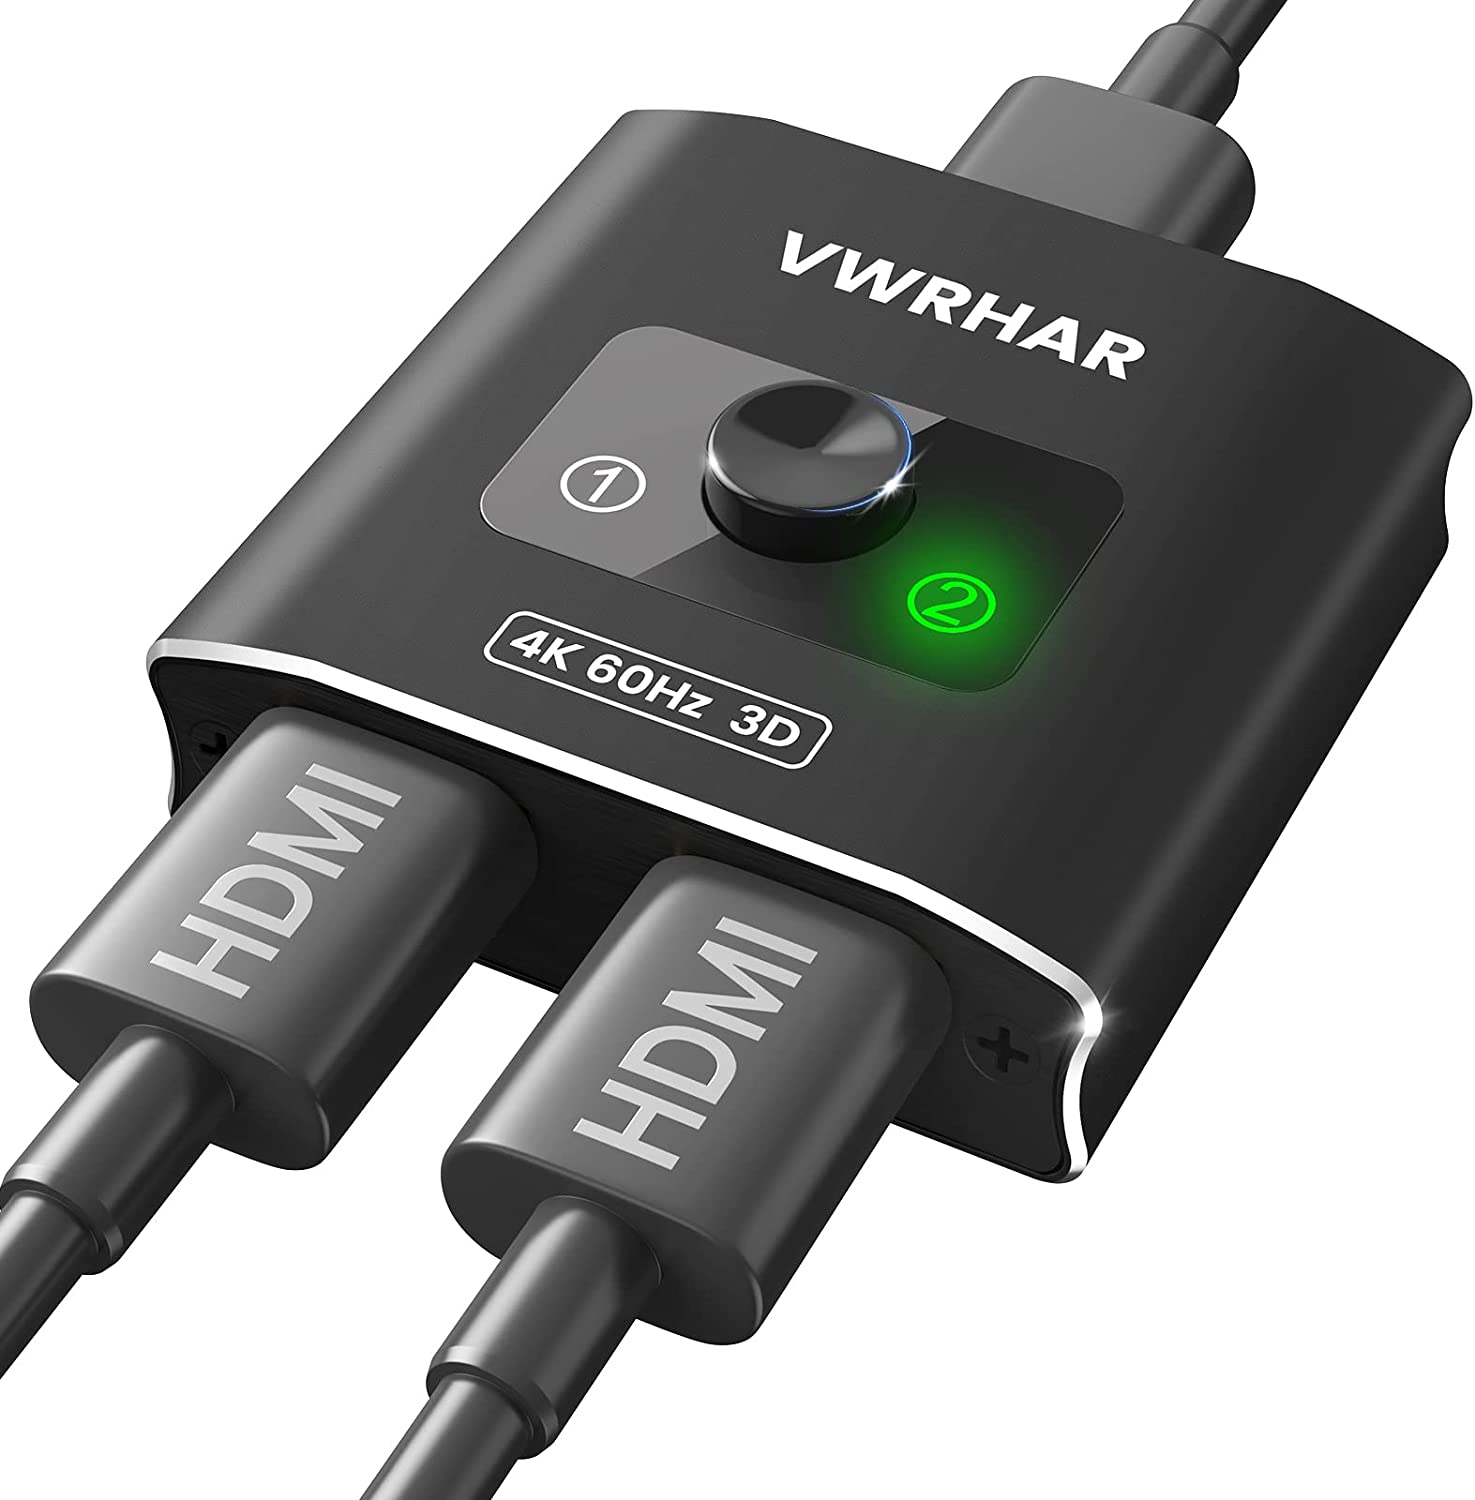 VWRHar Plug & Play Stable HDMI Switch, 2-Port